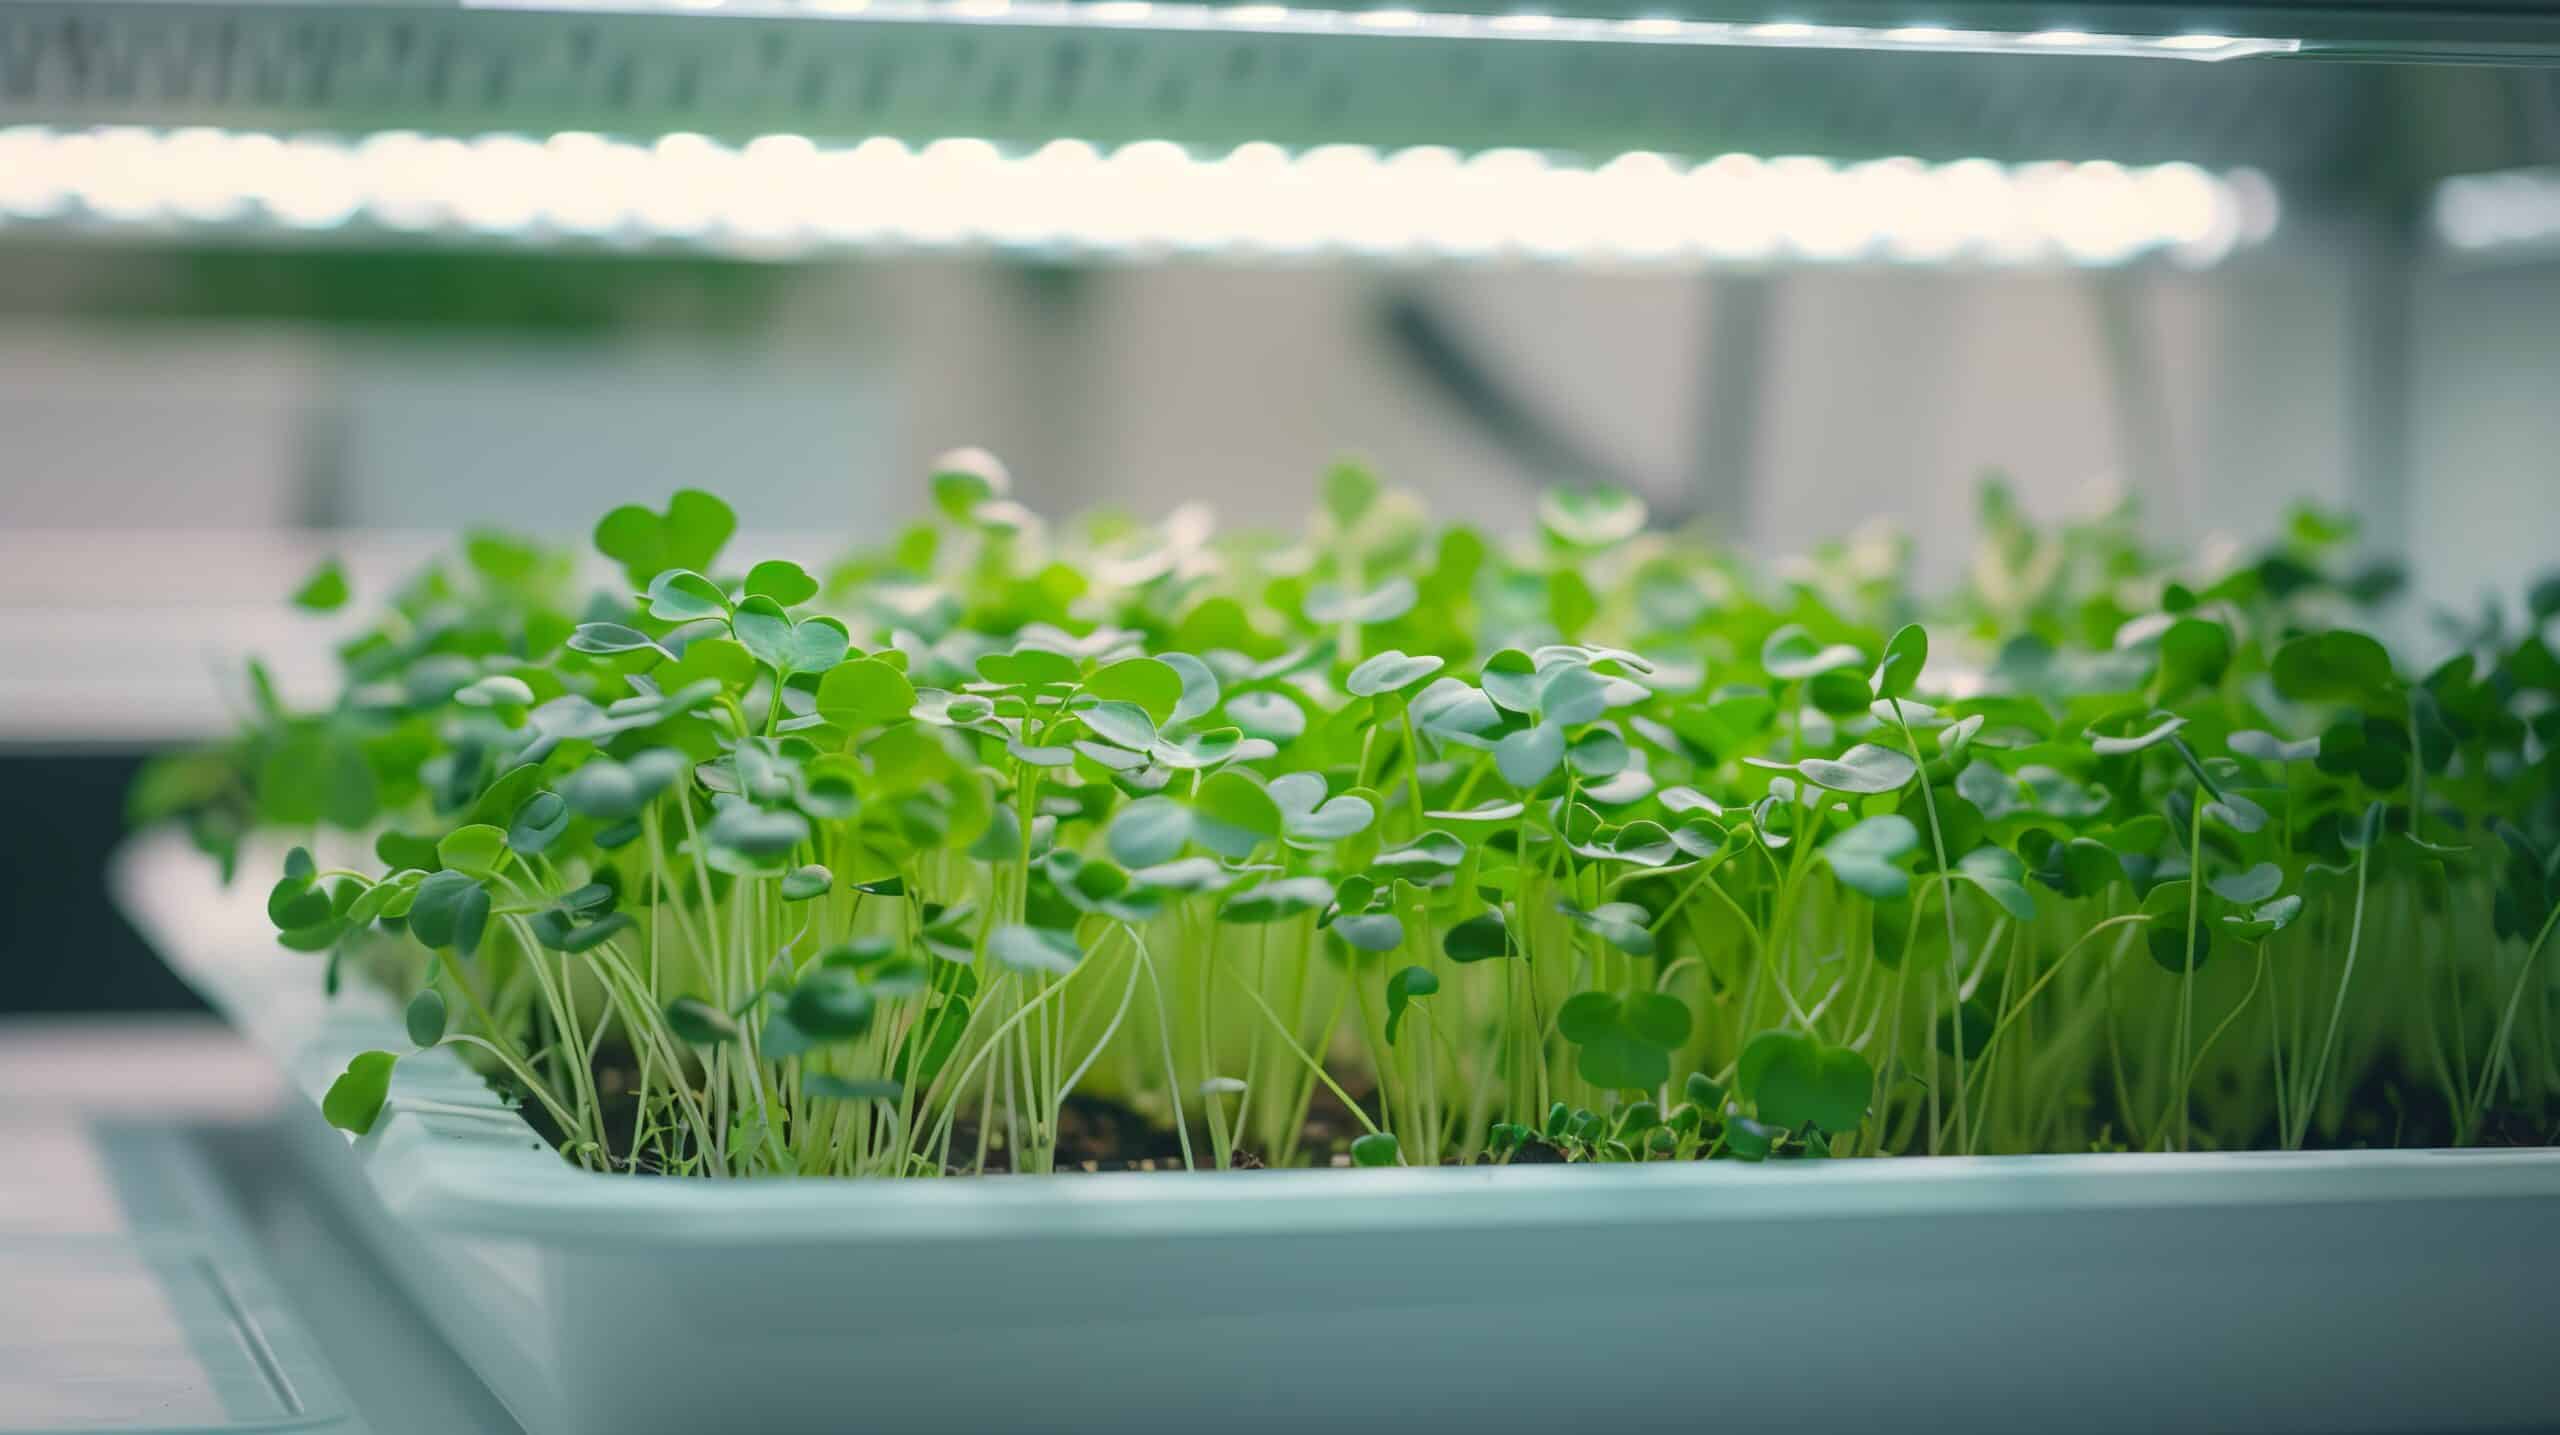 growmyownhealthfood.com : Are microgreens healthier than spinach?